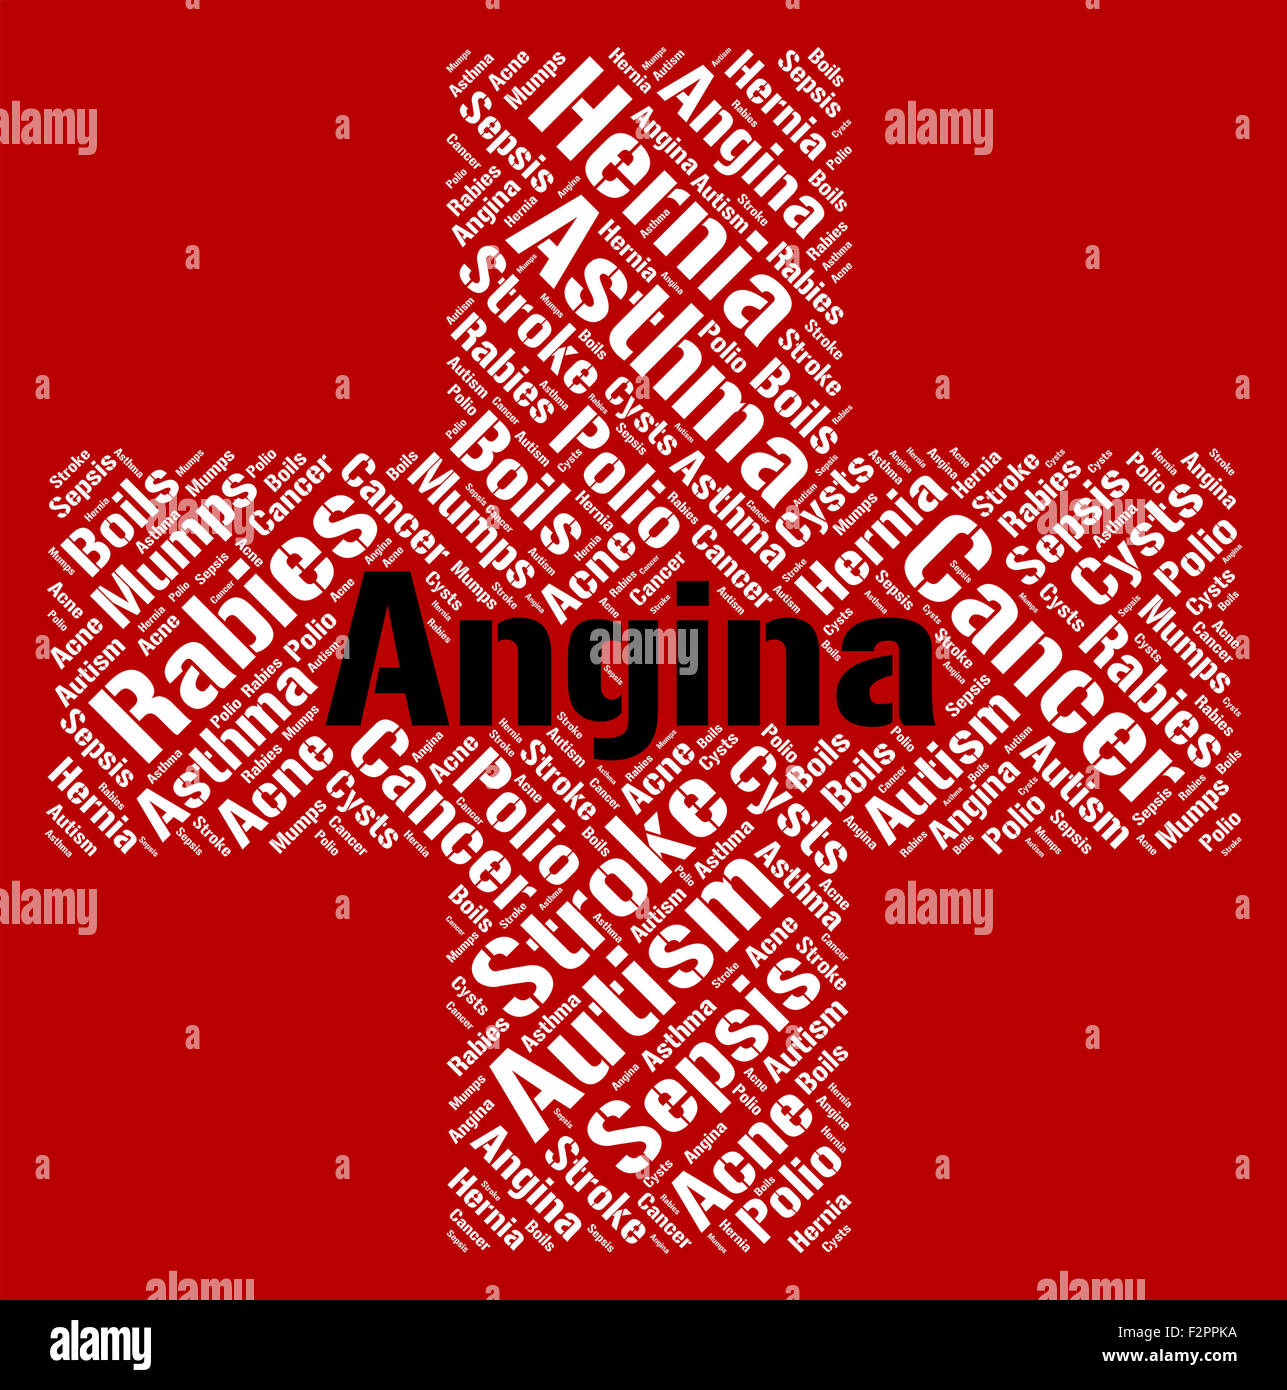 Angina Word Showing Congestive Heart Failure And Congenital Heart Disease Stock Photo